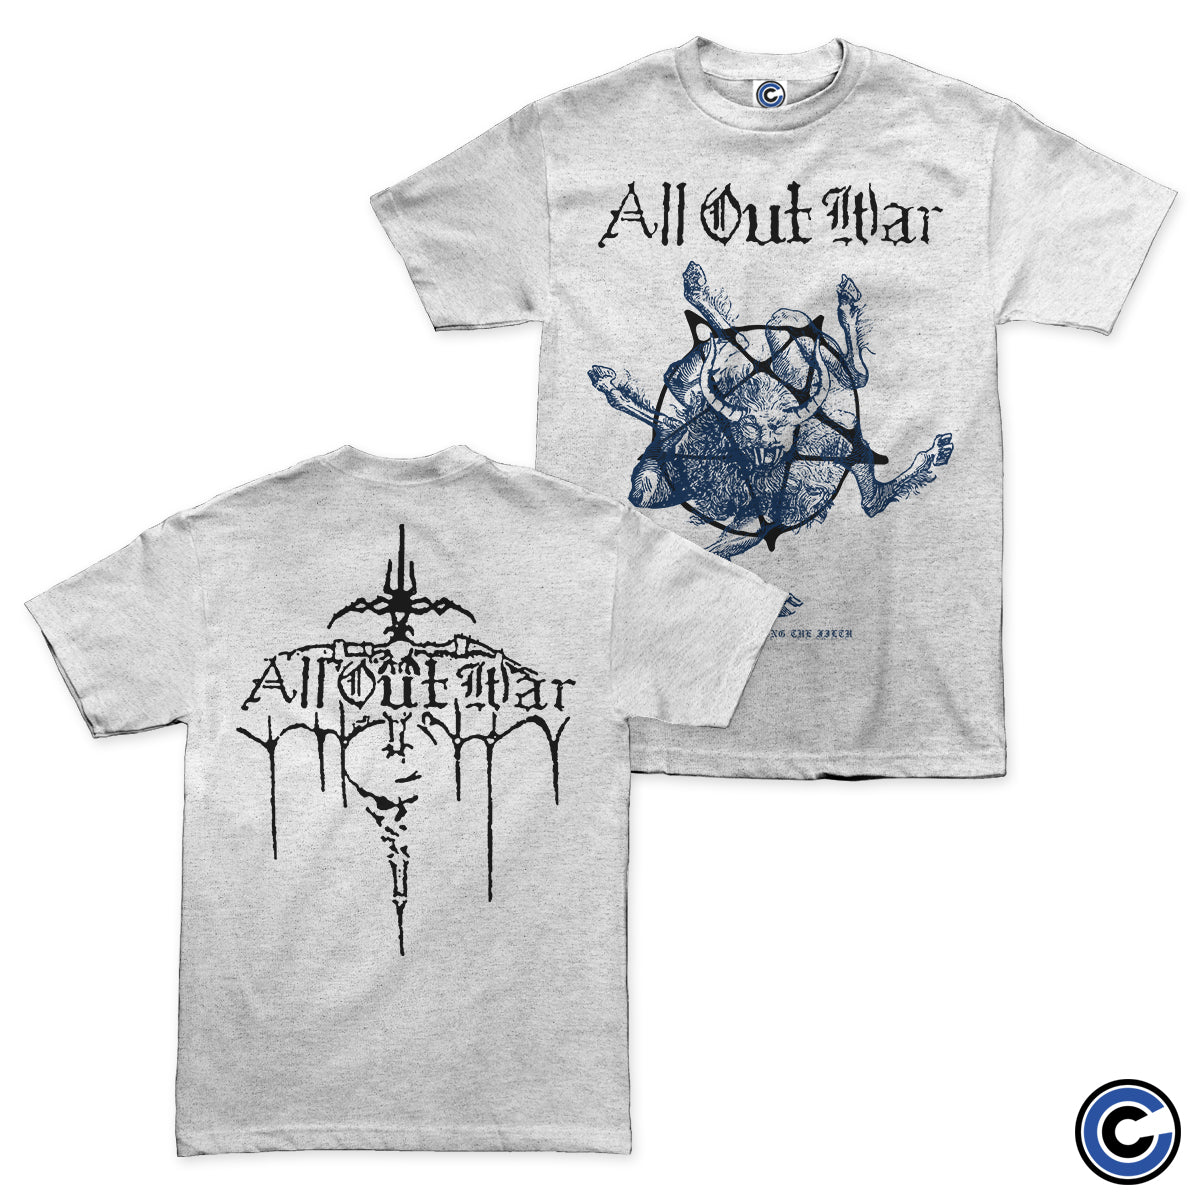 All Out War "Crawl" Shirt